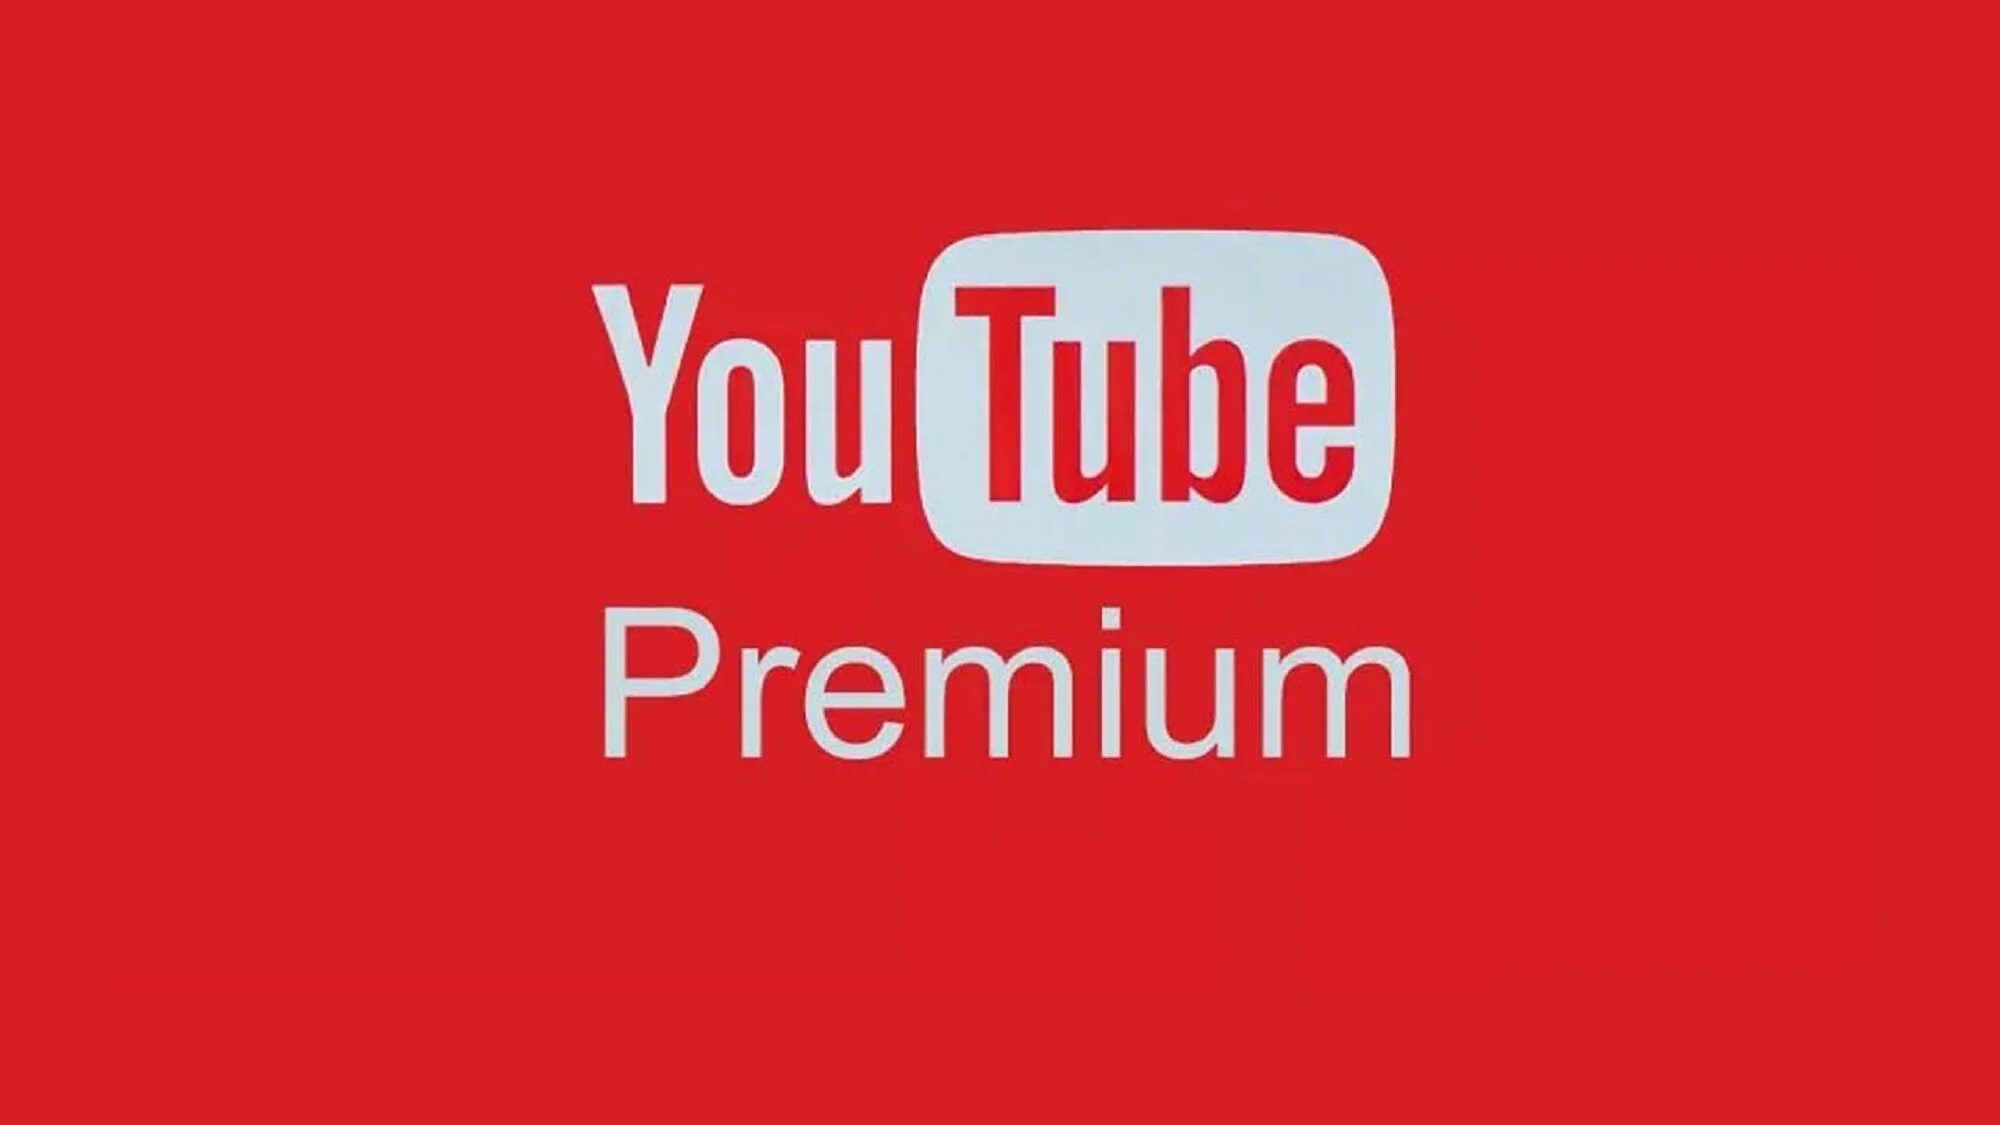 Youtube Premium. Ютуб премиум. Логотип ютуб. Ютуб премиум логотип.